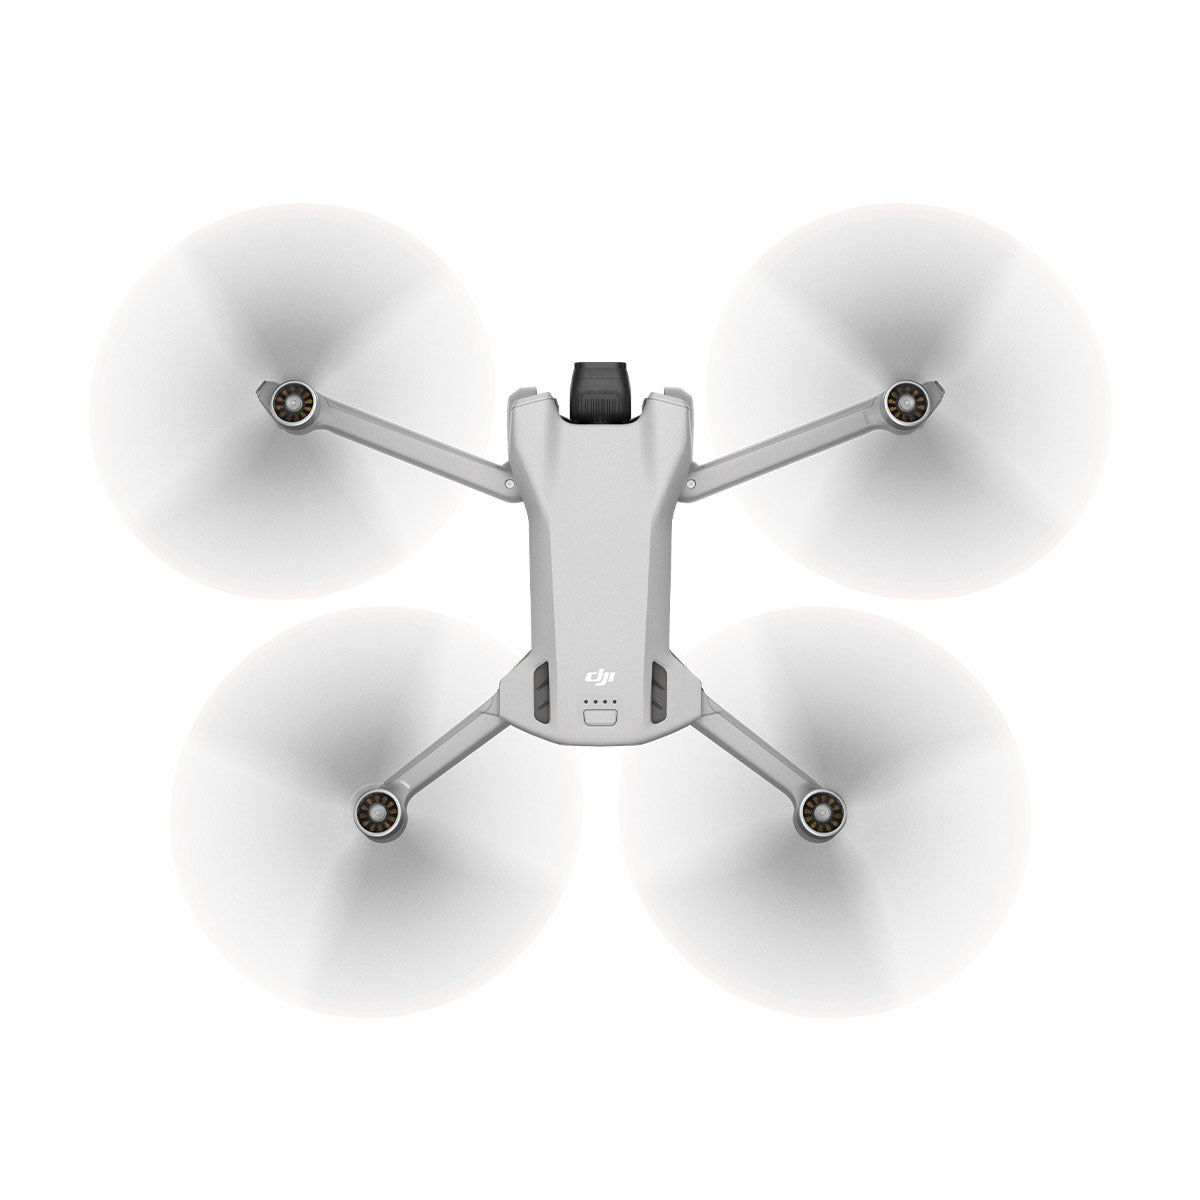 DJI Mini 3 Drone with RC-N1 Remote Controller